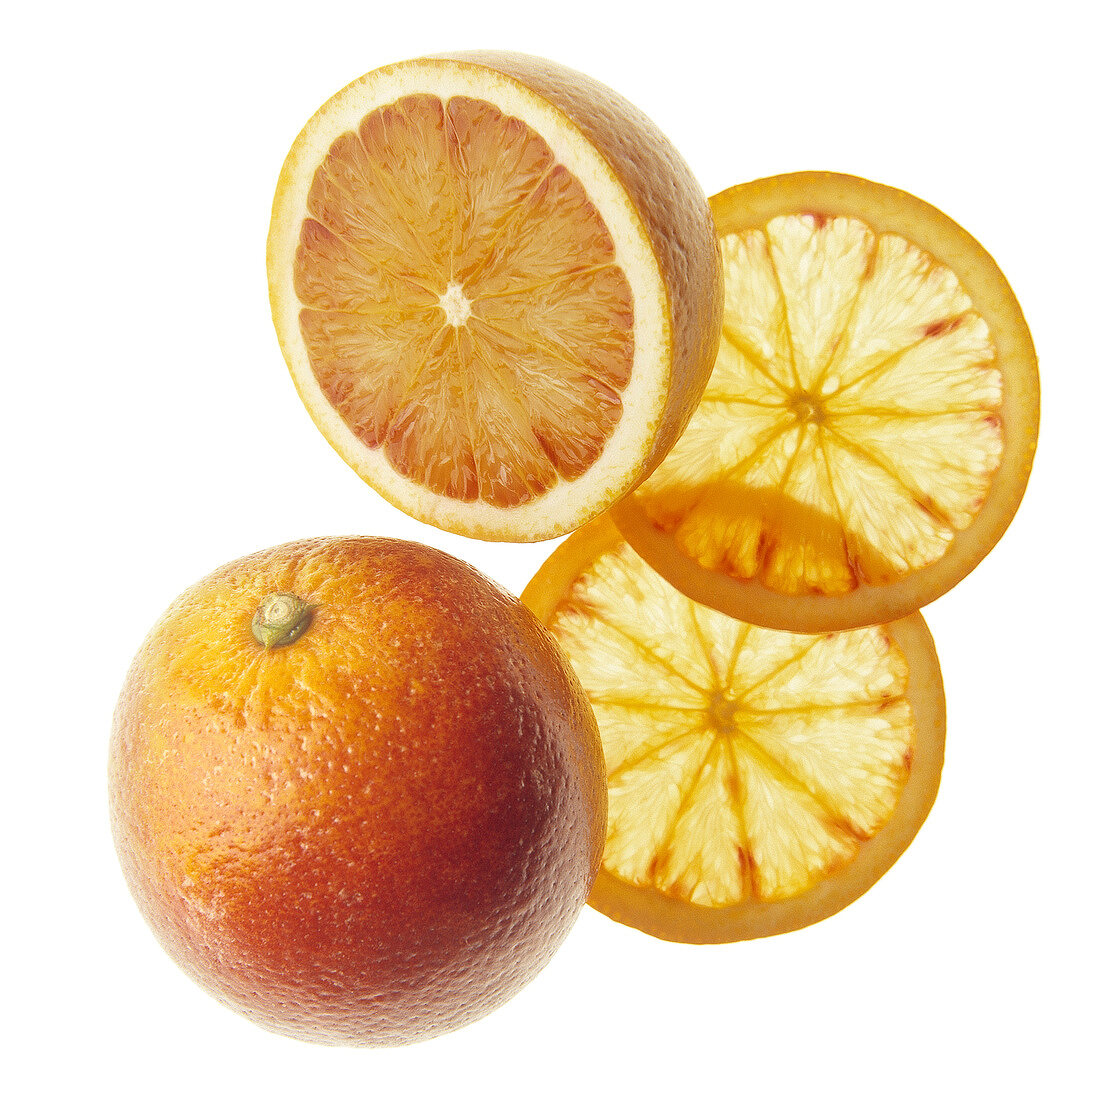 Orange and orange slices